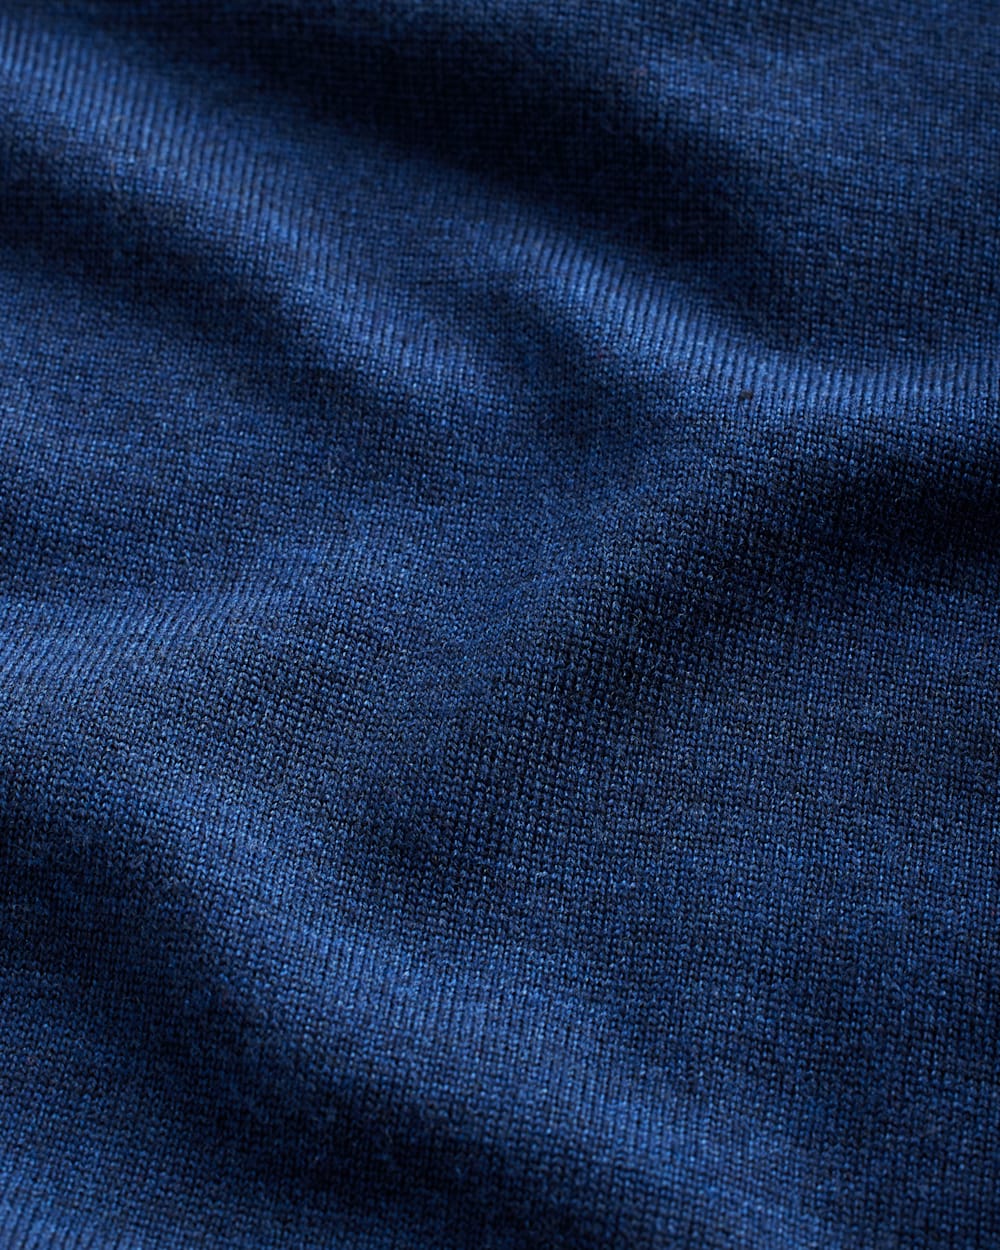 ALTERNATE VIEW OF WOMEN'S RAGLAN MERINO TURTLENECK IN BALTIC BLUE image number 7